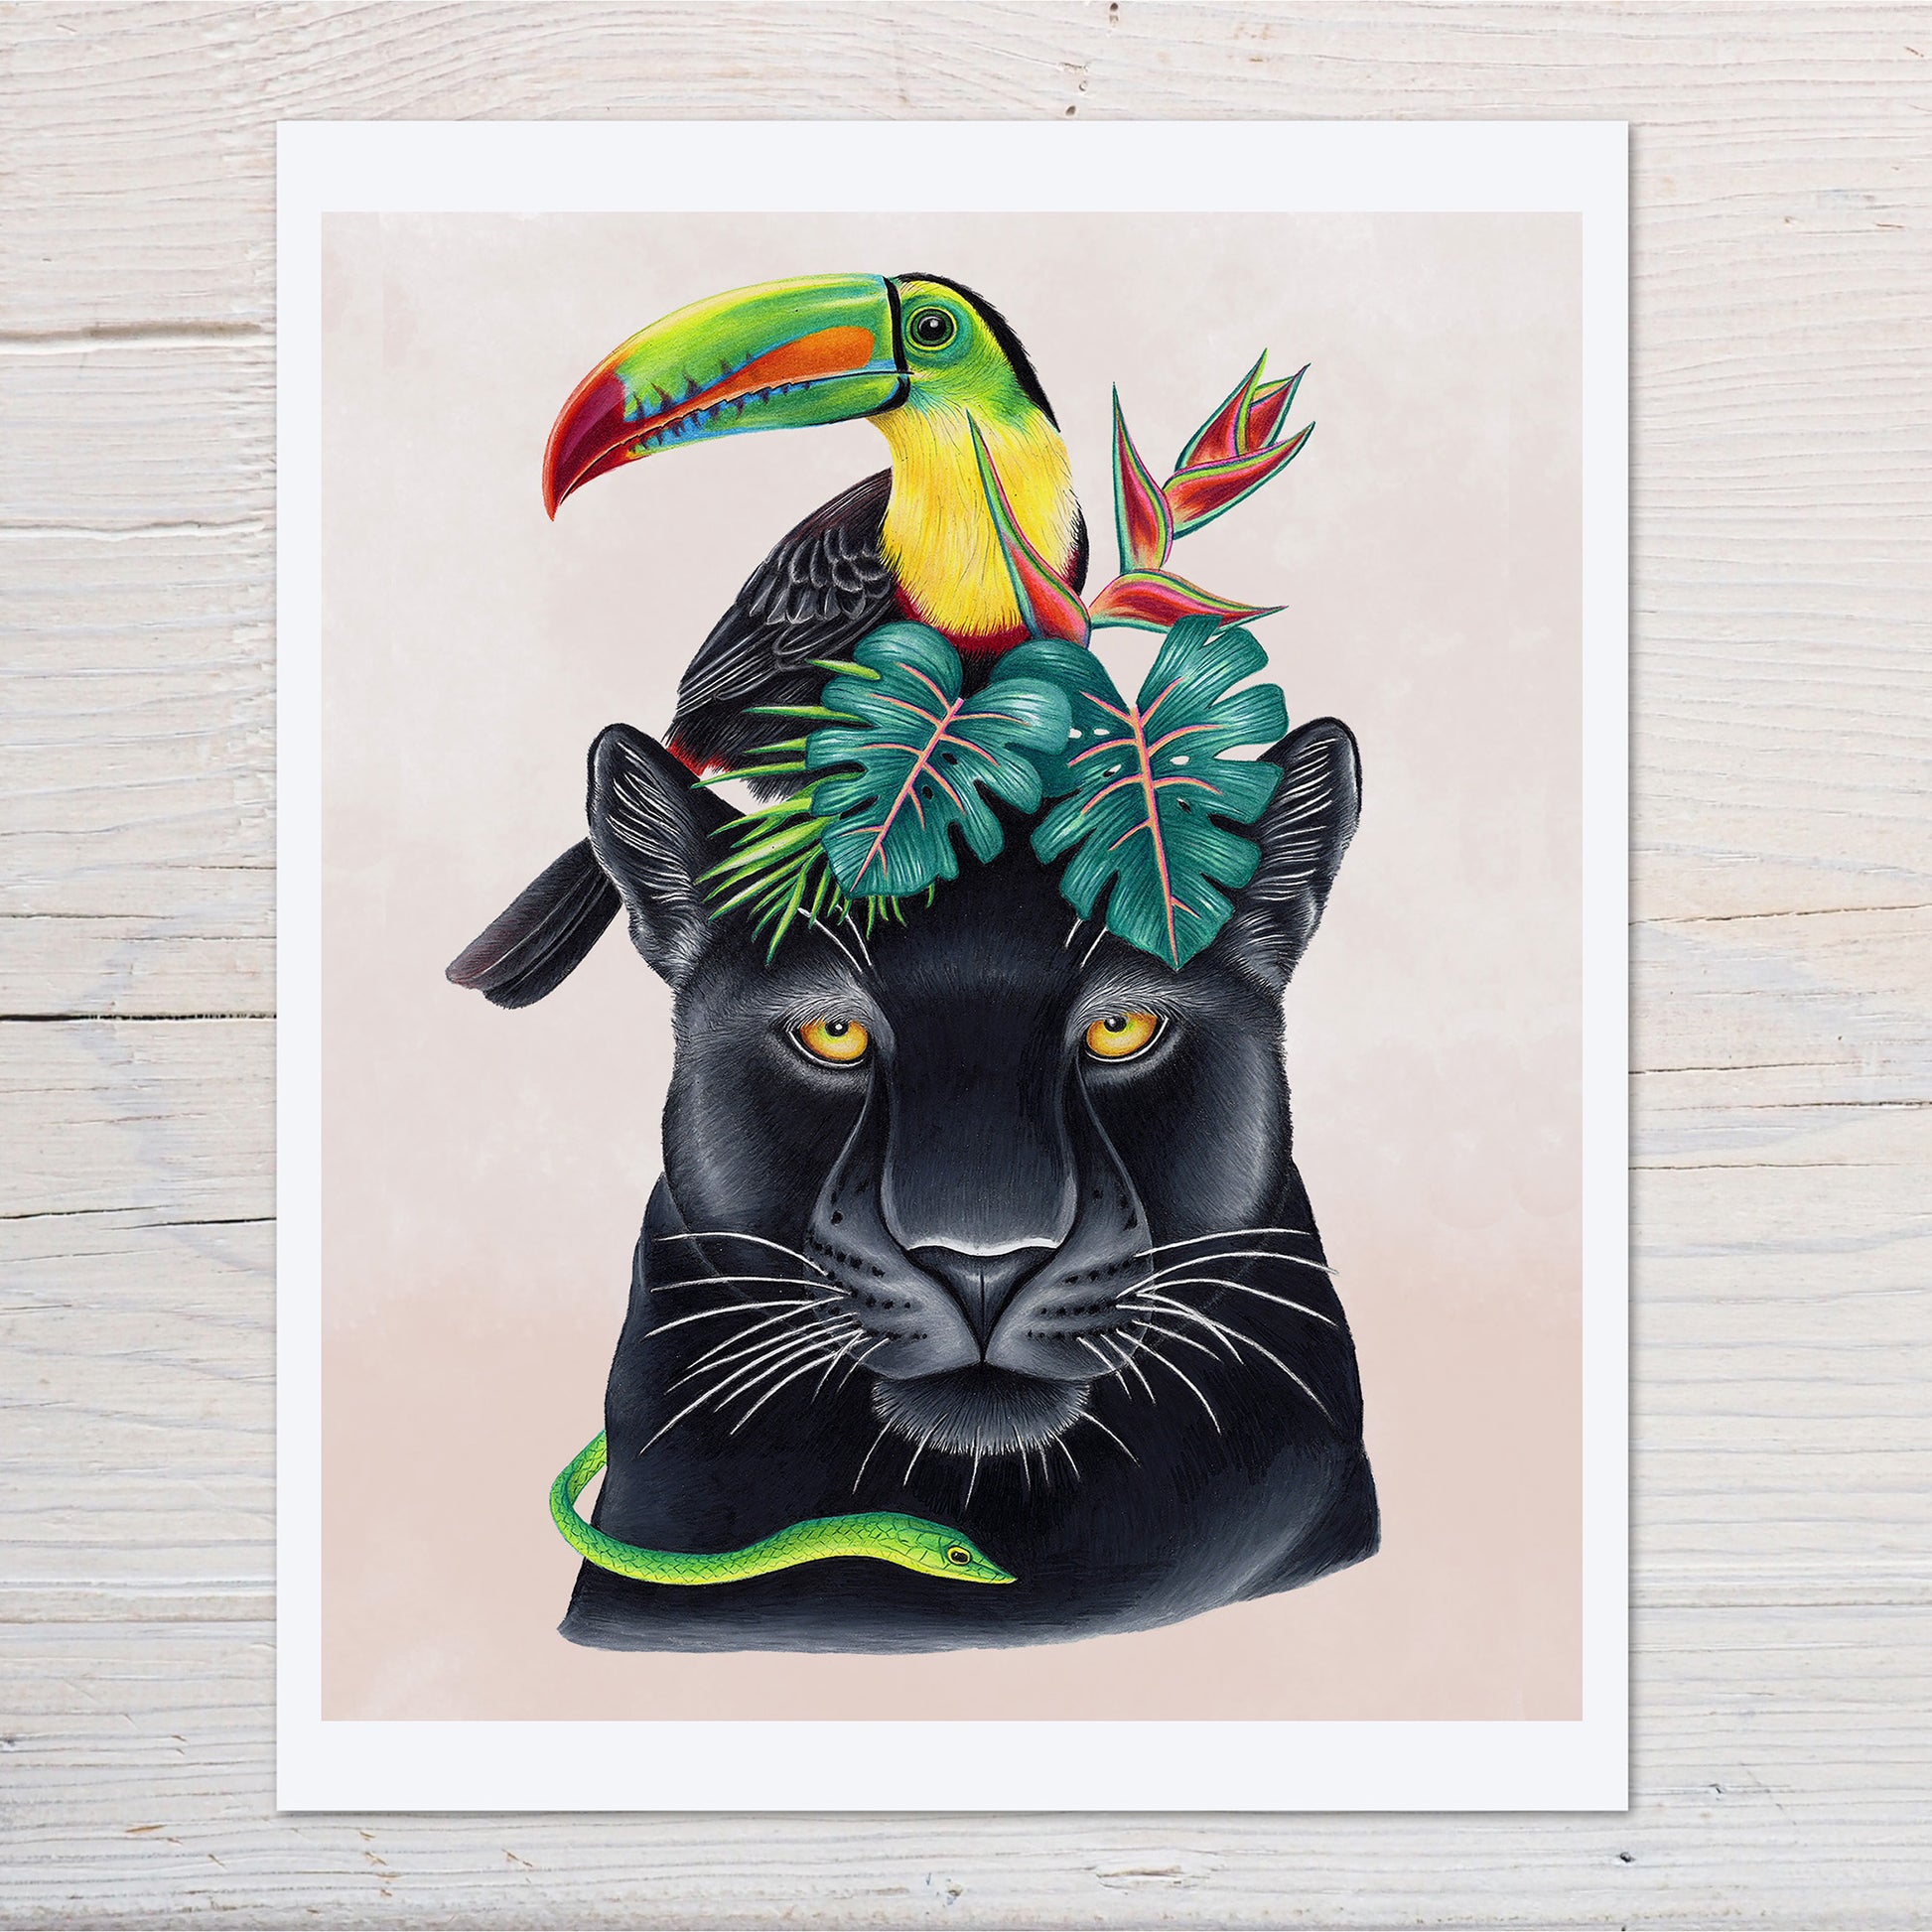 Hand drawn pencil art of black jaguar with toucan and tropical plants by Rachel Diaz-Bastin. Prints available.